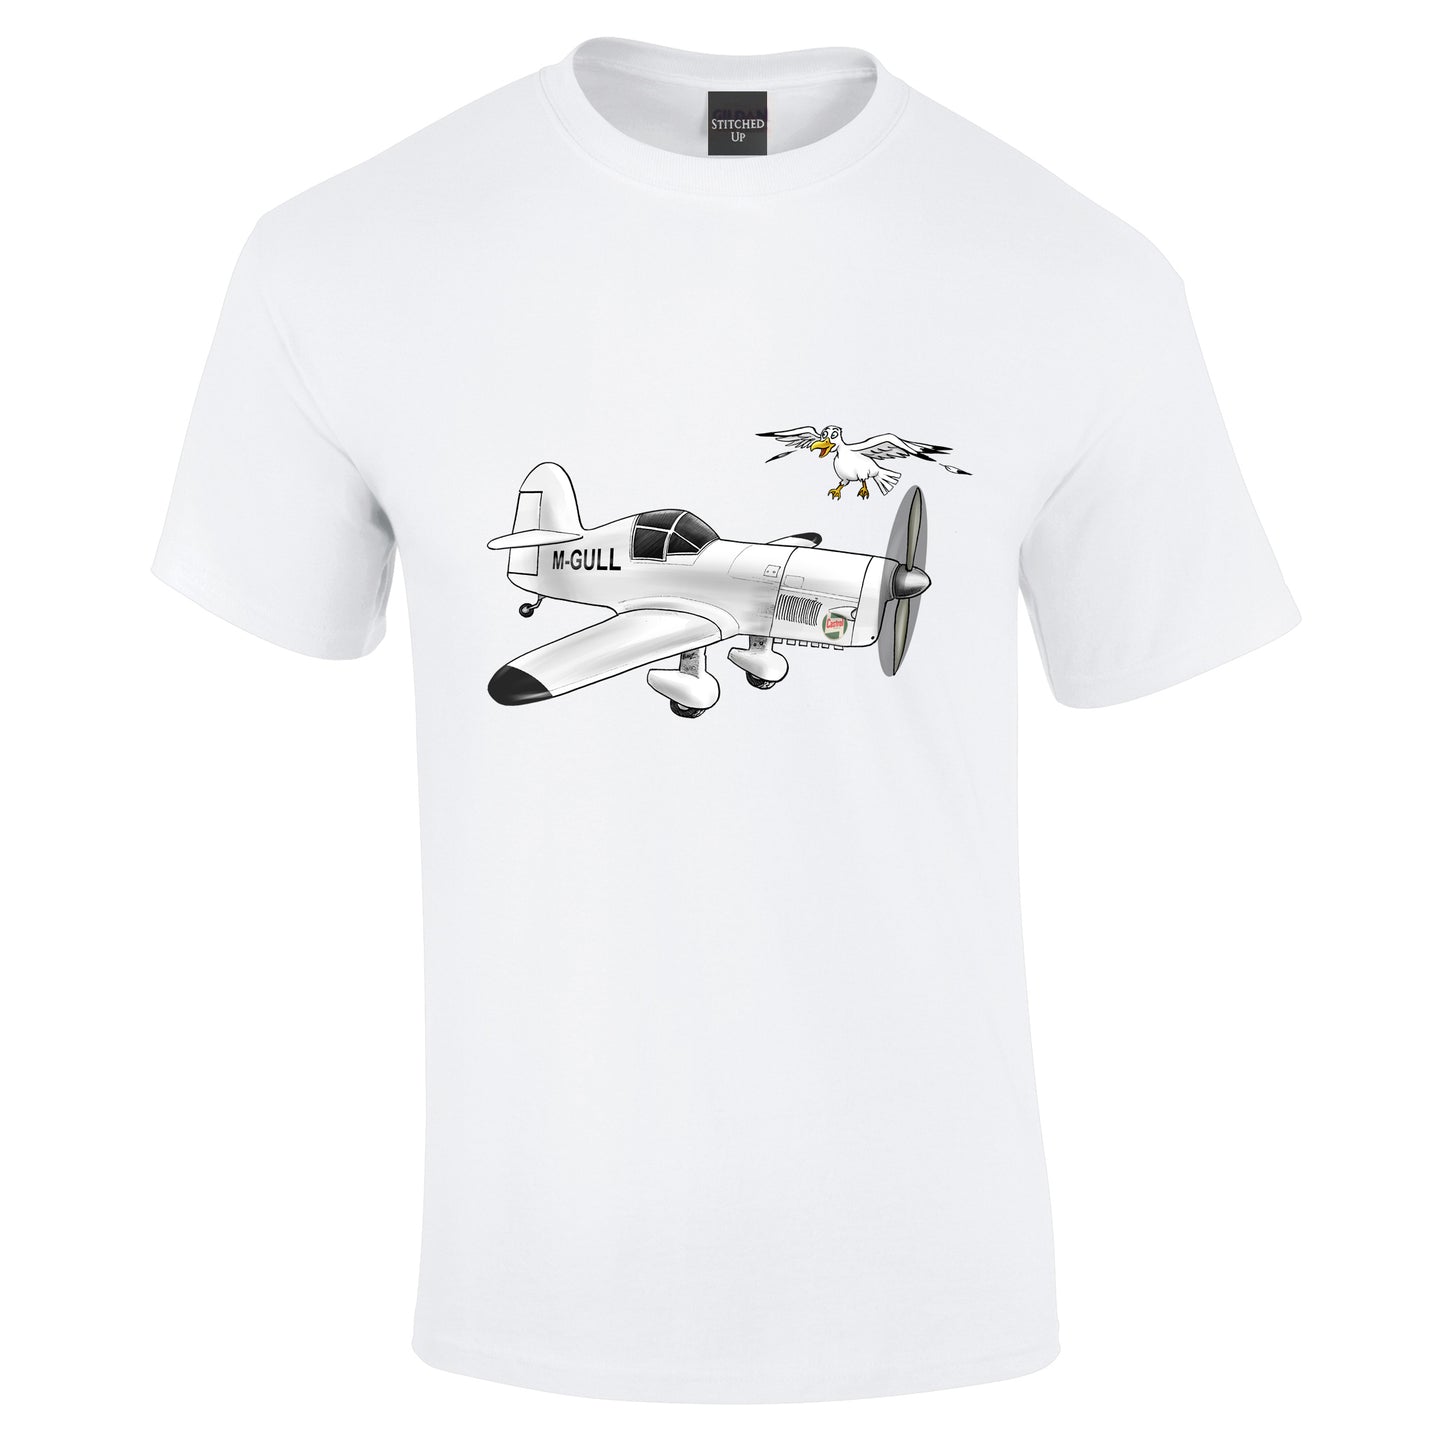 The Percival Mew Gull Aircraft T-Shirt